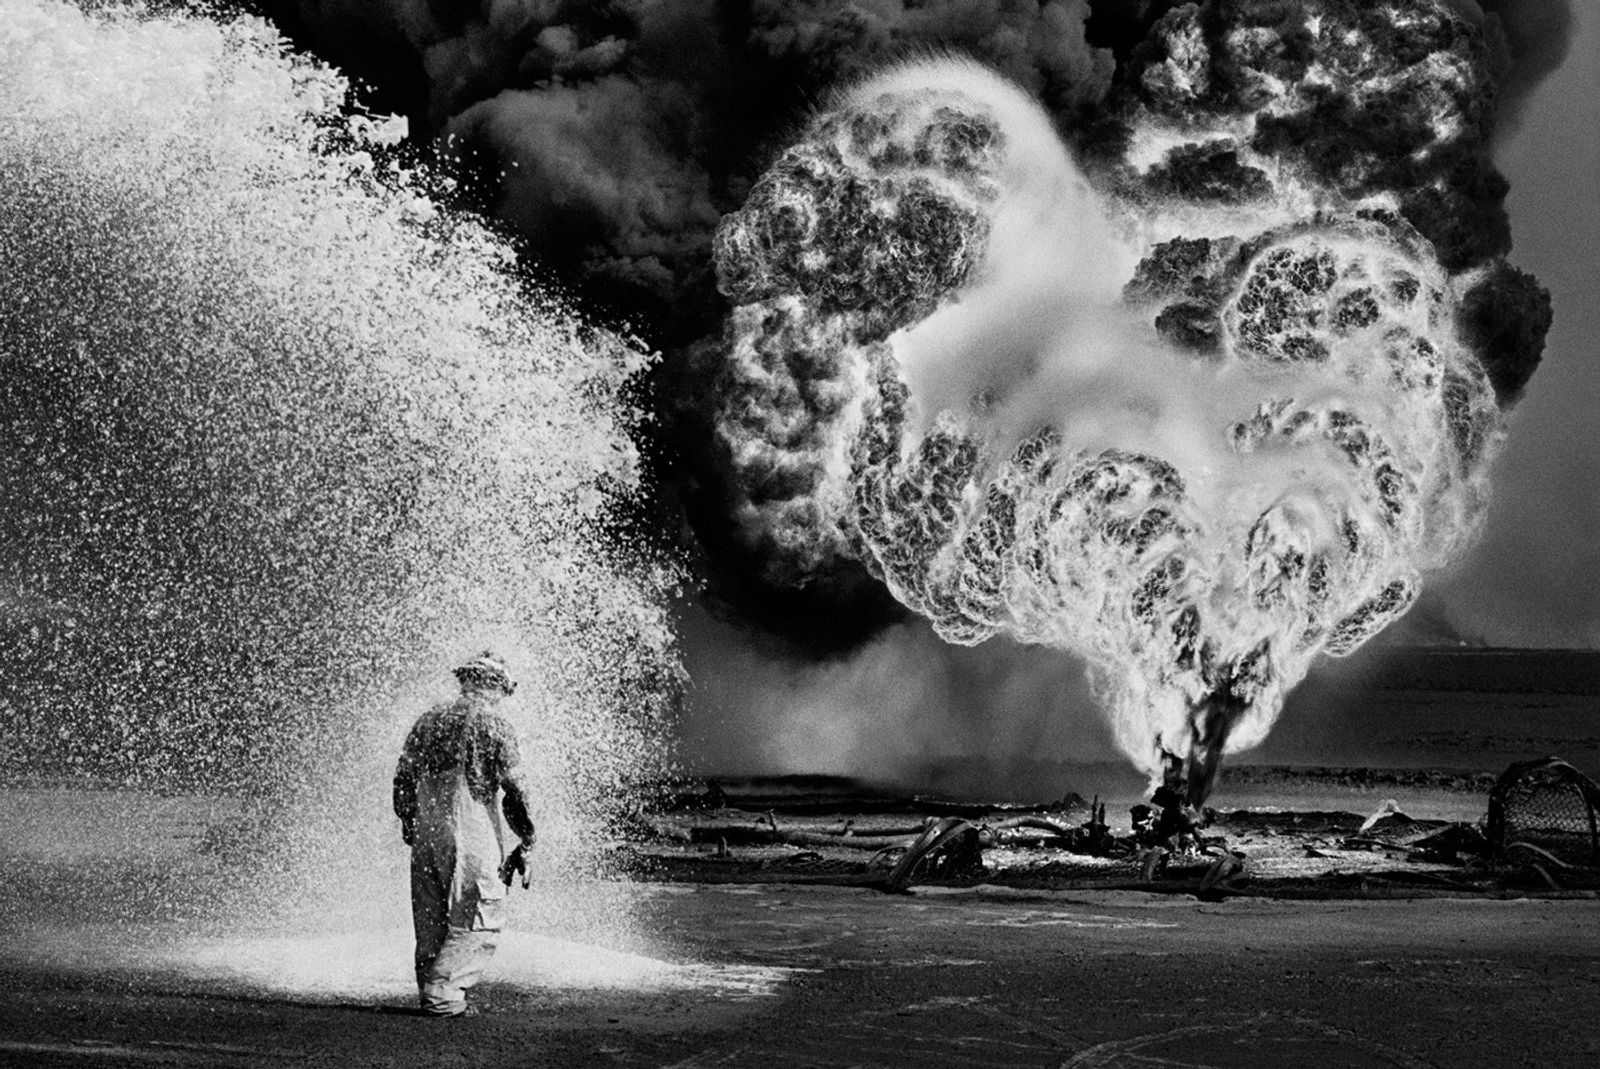 © Sebastião Salgado, from the series, Kuwait: A Desert on Fire